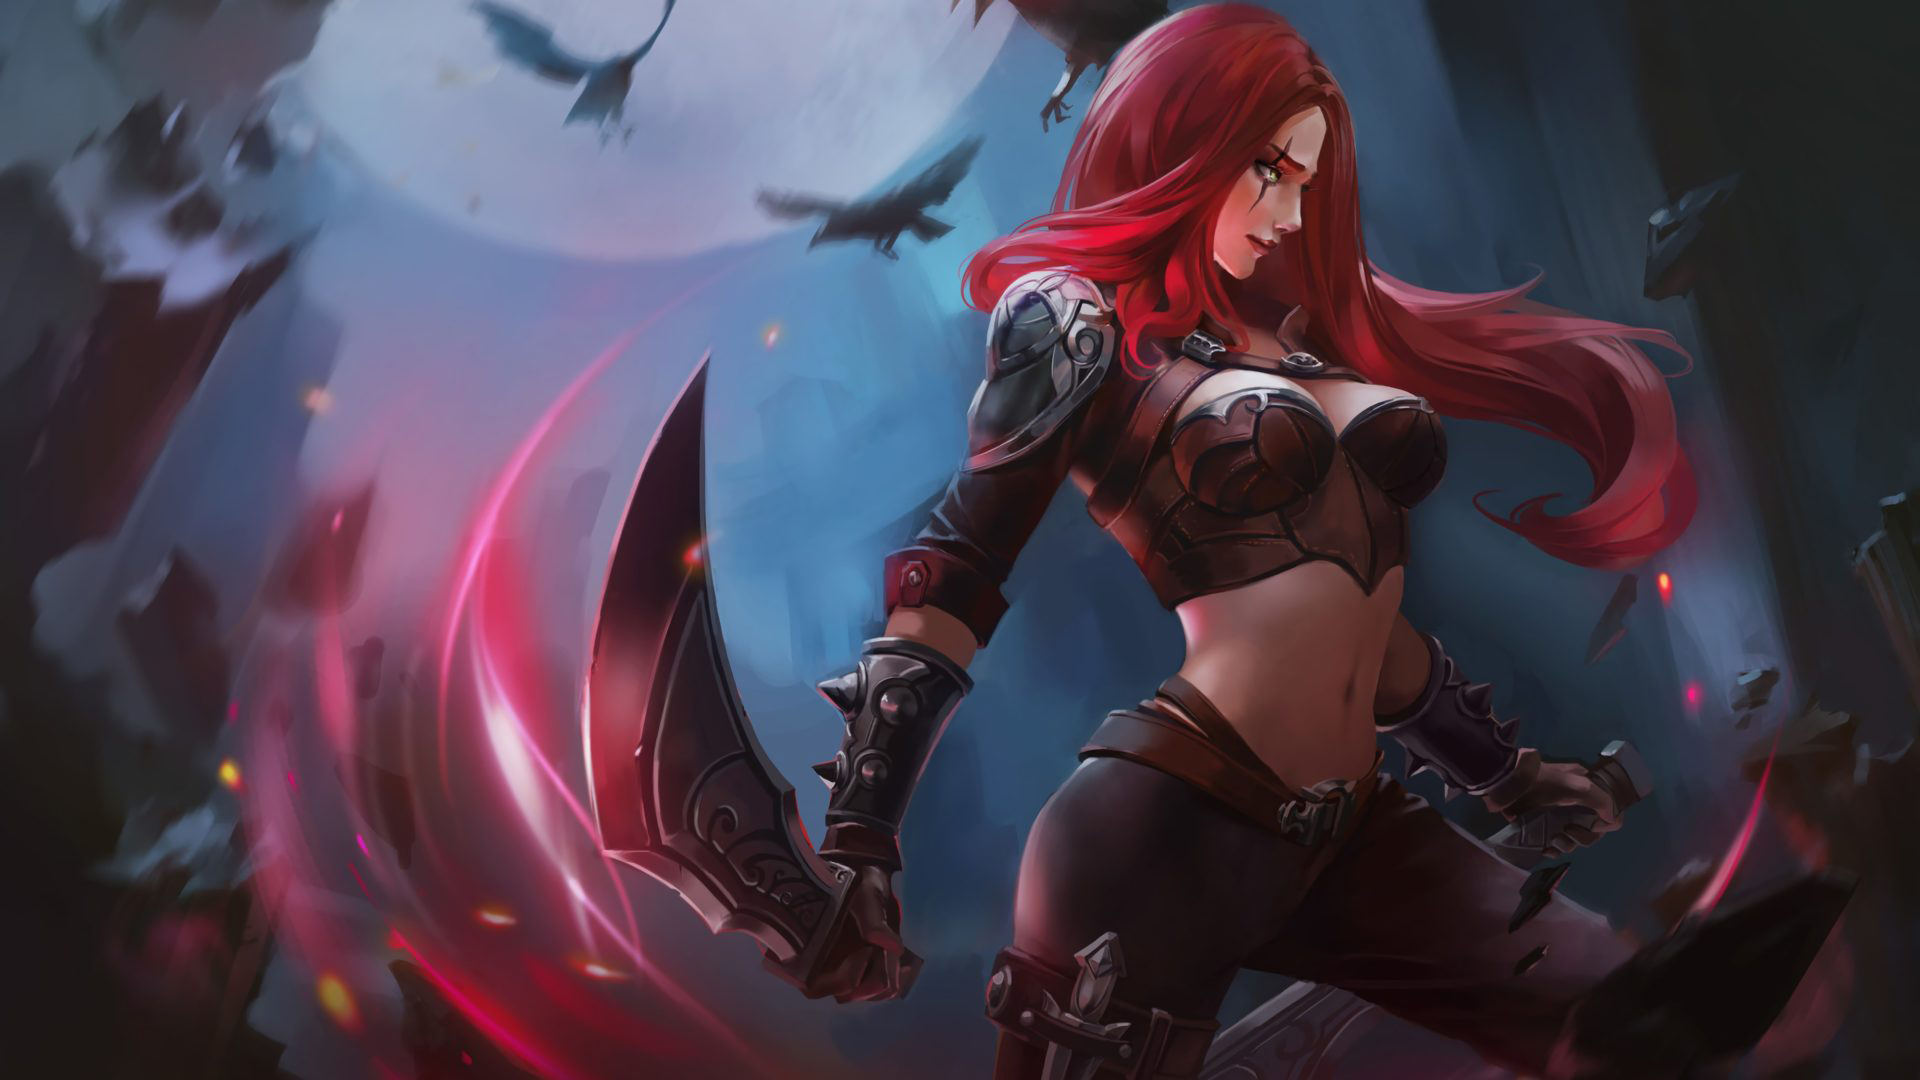 Katarina Warrior Skins 2K League Of Legends